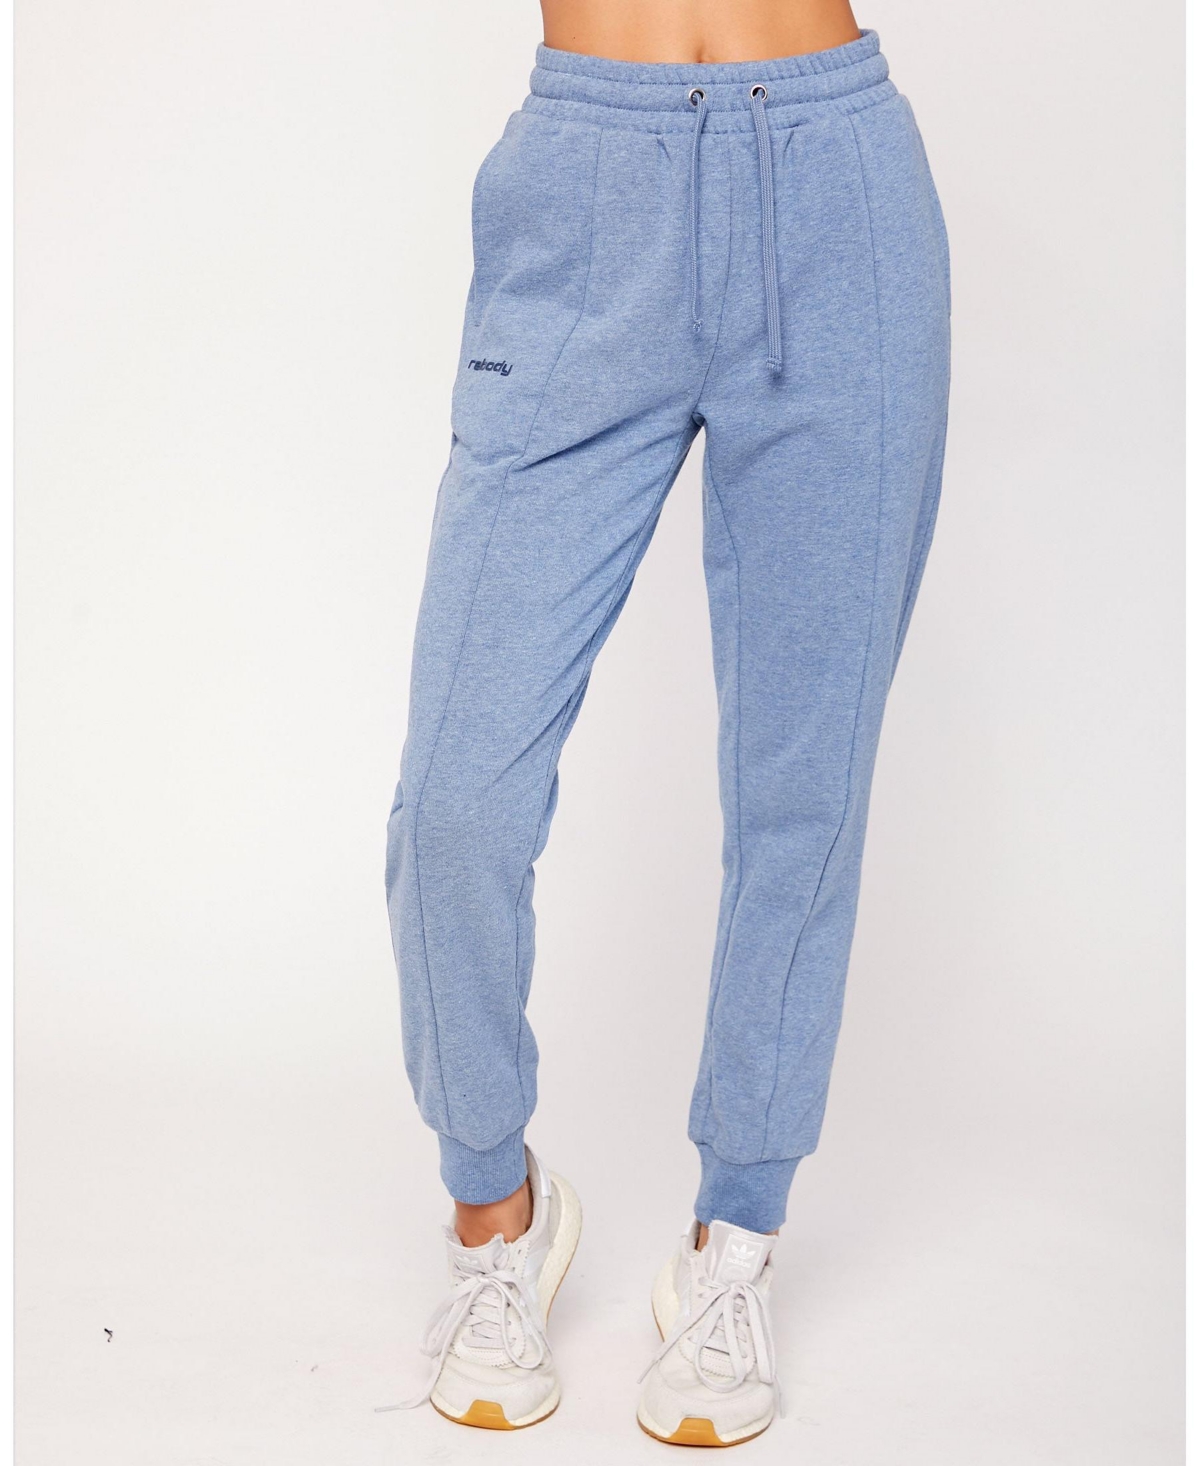 Women's Rebody Pintuck French Terry Sweatpants for Women - Indigo heather blue